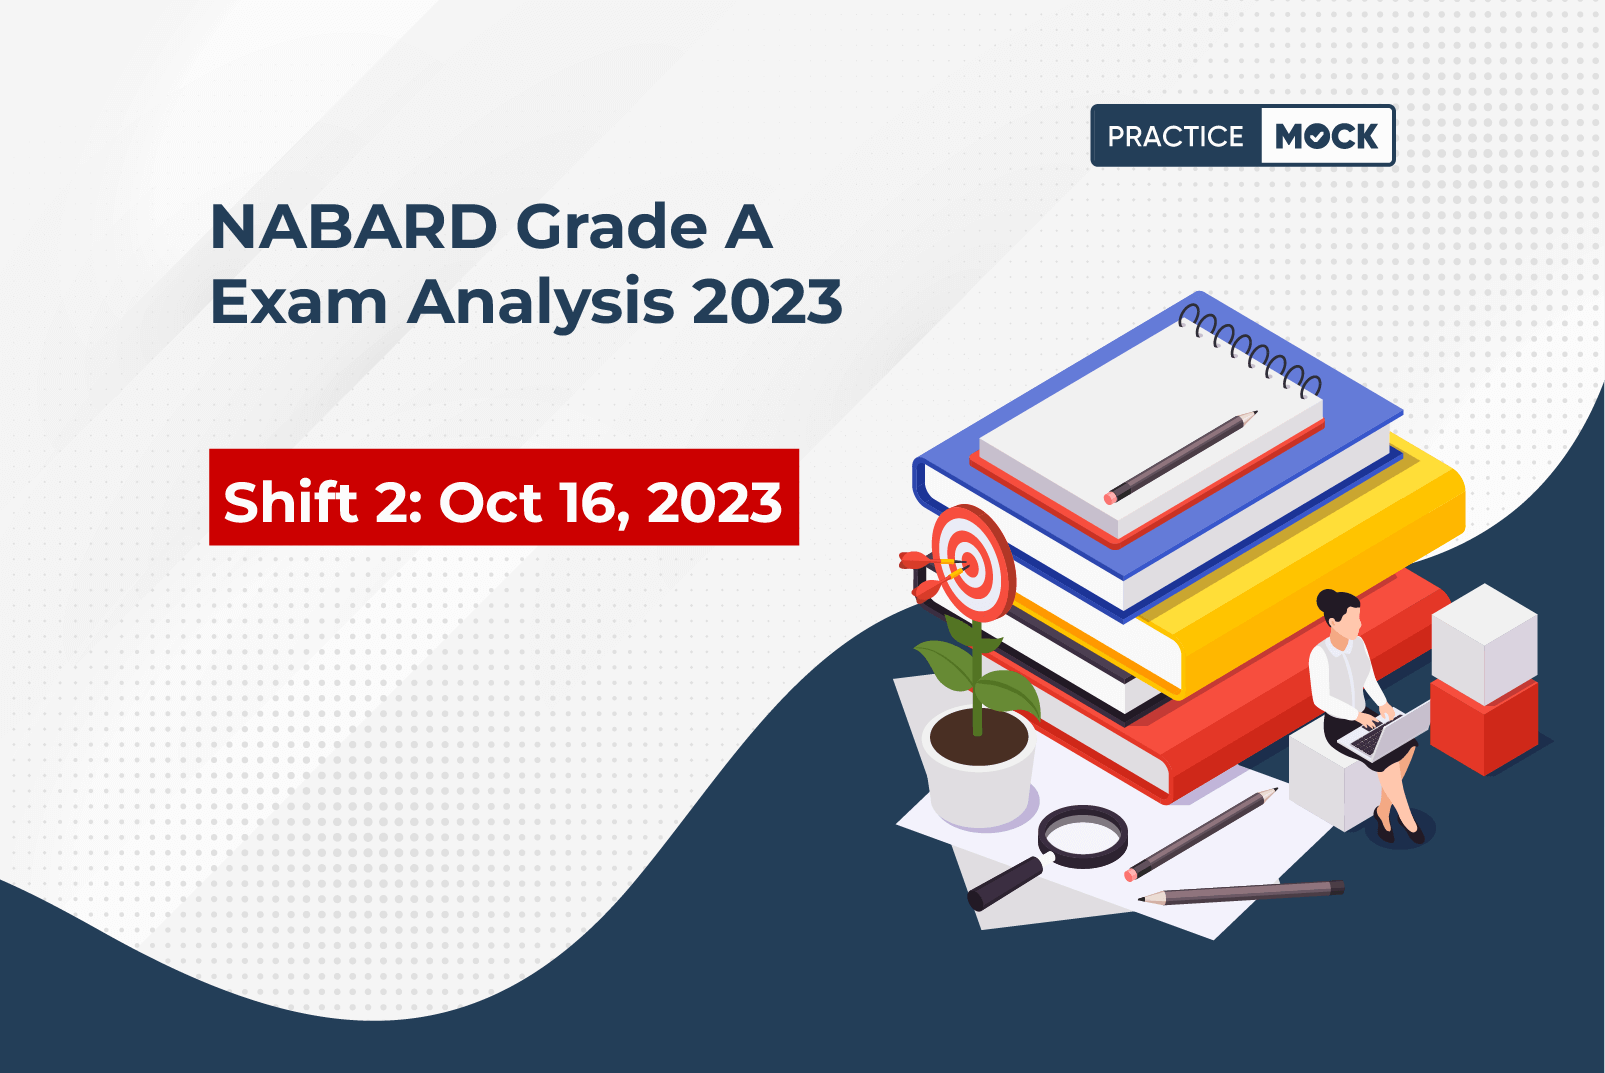 NABARD Grade A Exam Analysis 2023 Shift 2 October 16, 2023